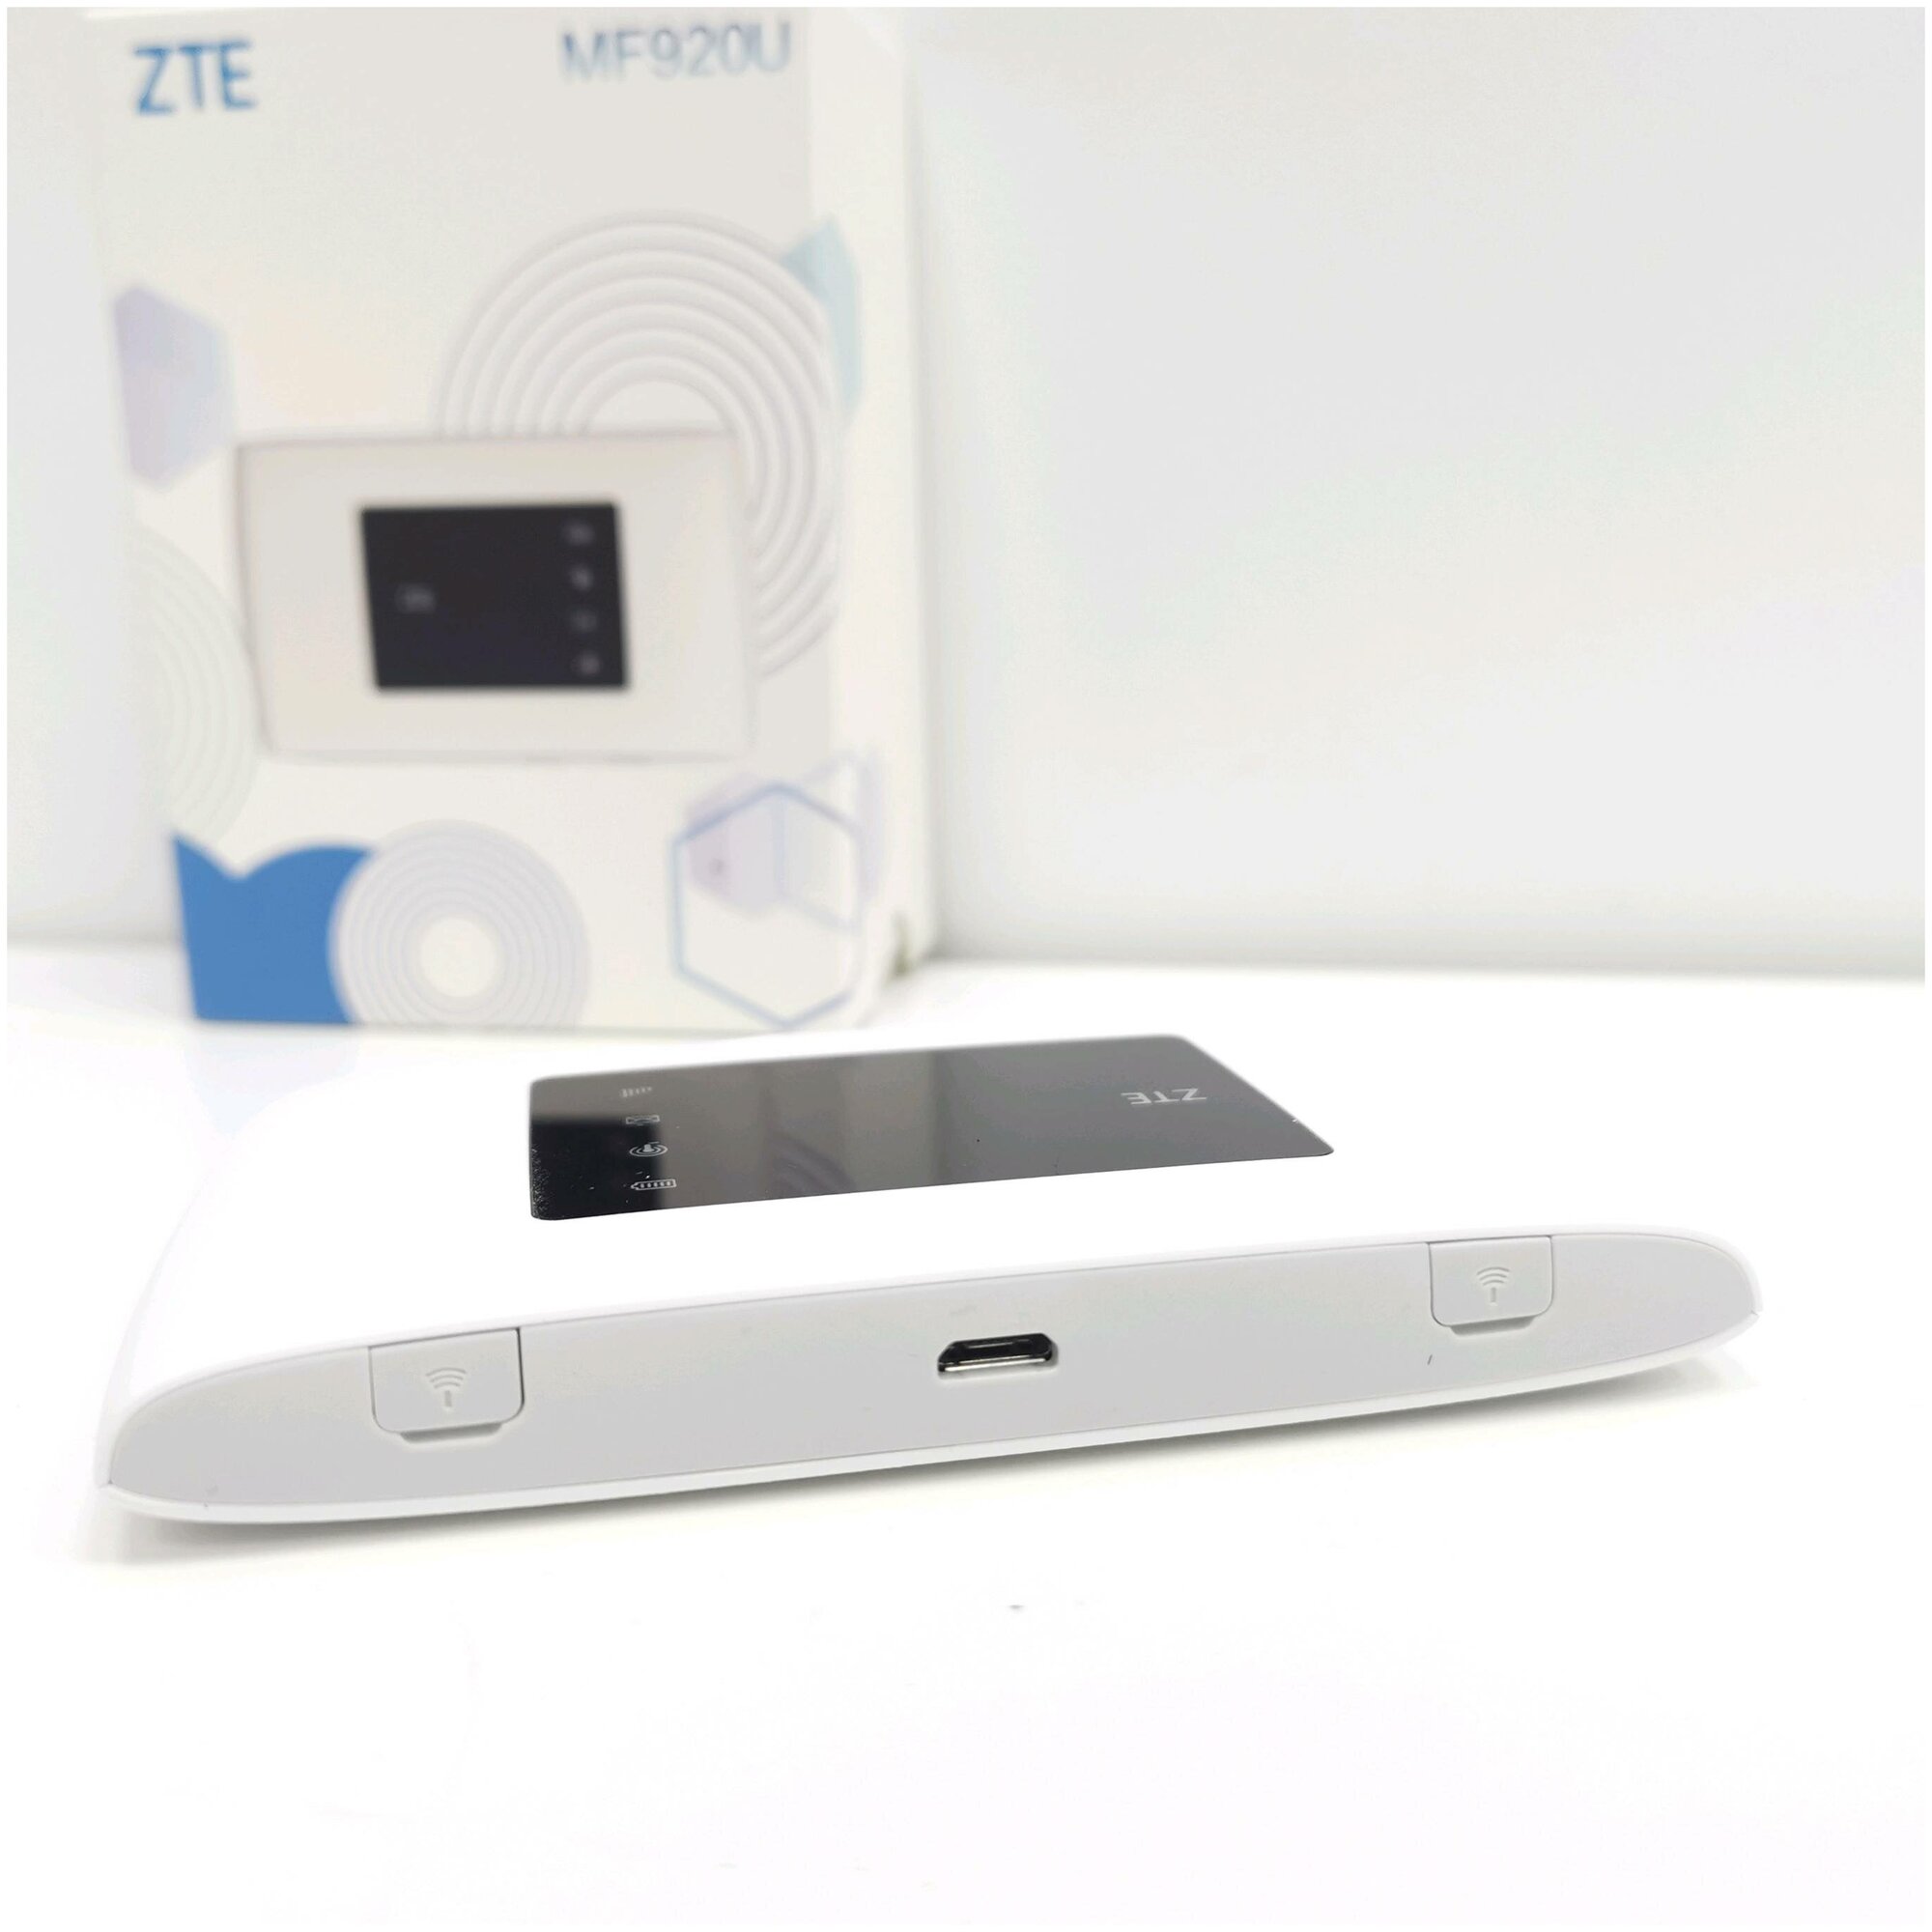 Любой Тариф 4G модем - WiFi роутер ZTE 920V SMART как Huawei 5573 под Безлимитный Интернет под любой тариф